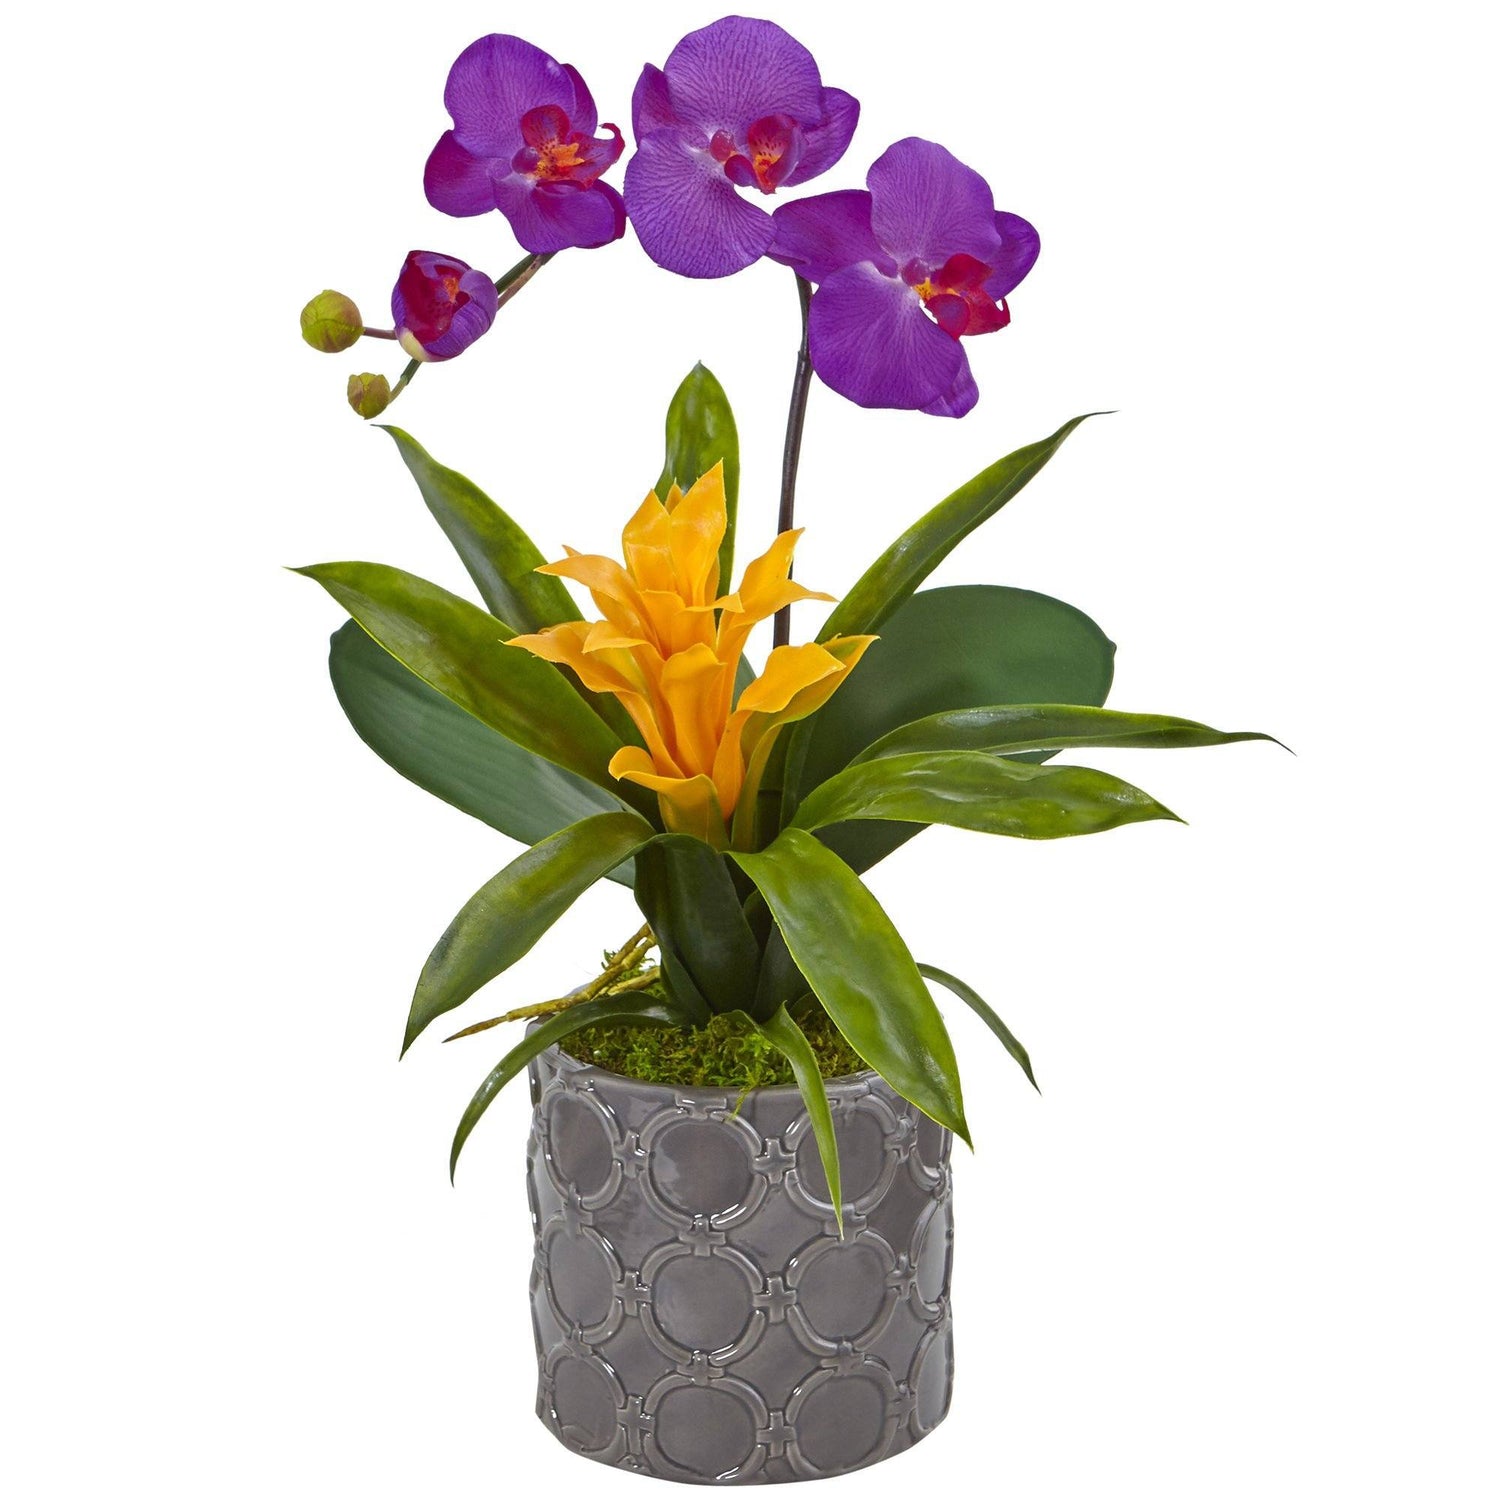 Mini Phalaenopsis Orchid and Bromeliad in Gray Vase